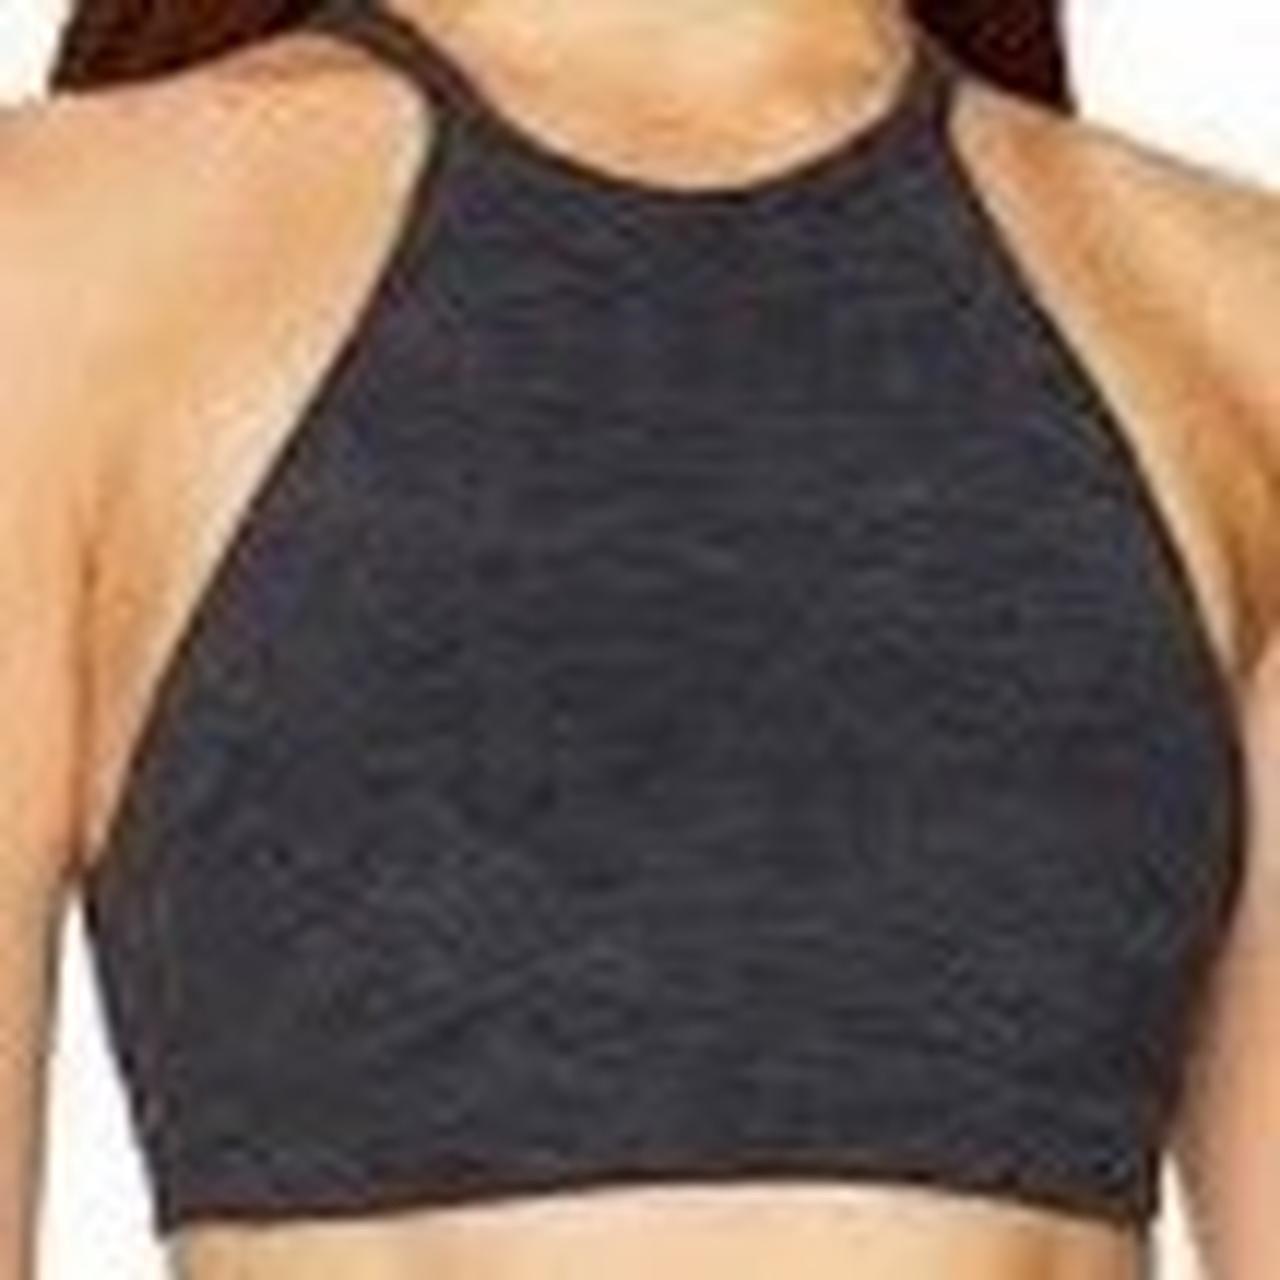 ALO wellness bra in athletic heather grey <3 - Depop